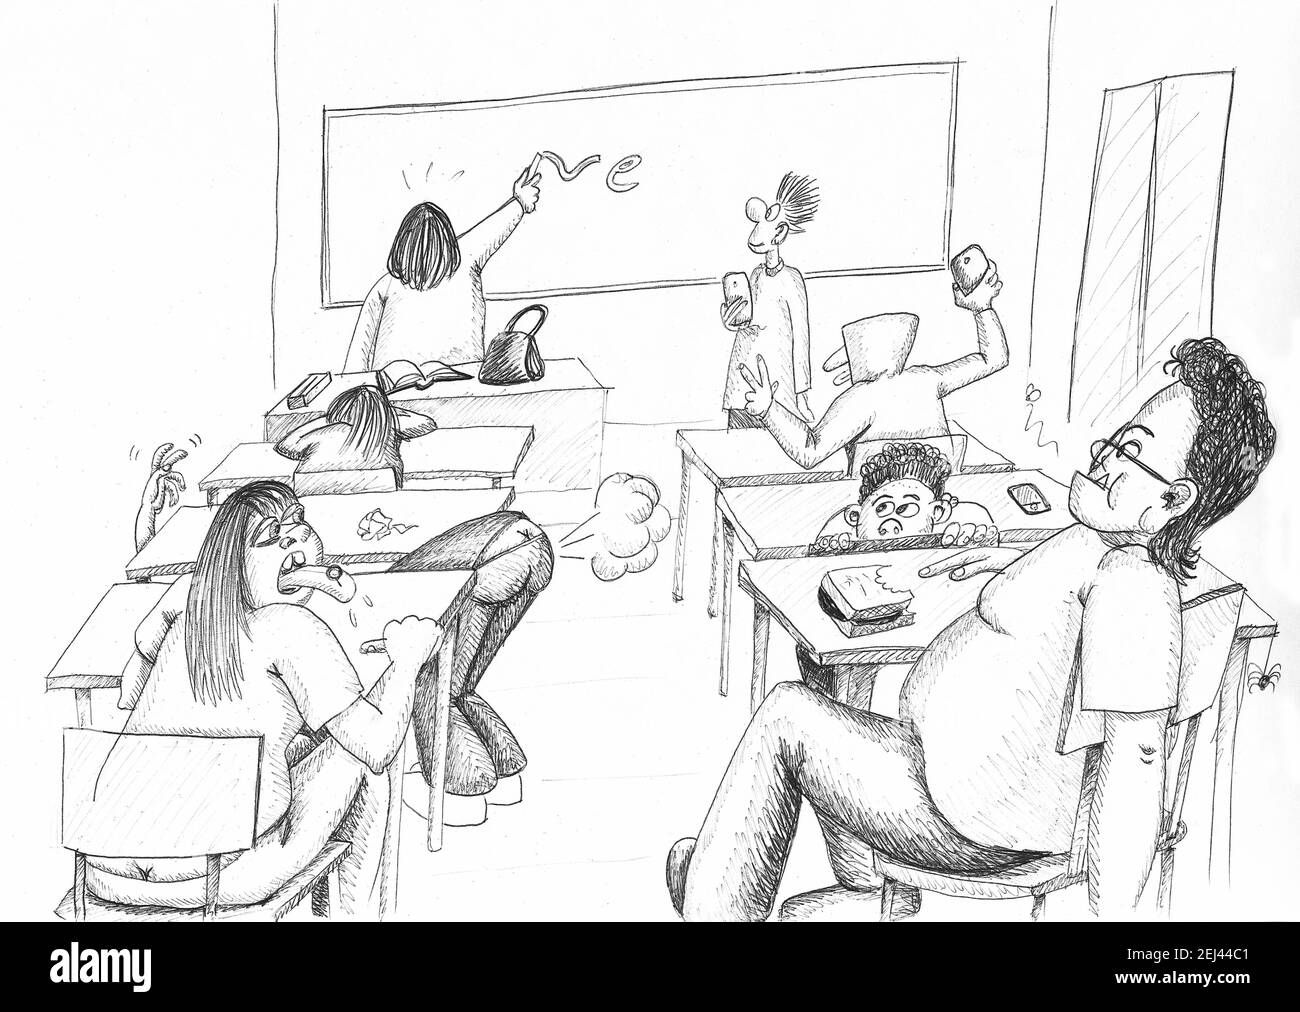 Students at school, behaving badly. Illustration. Stock Photo